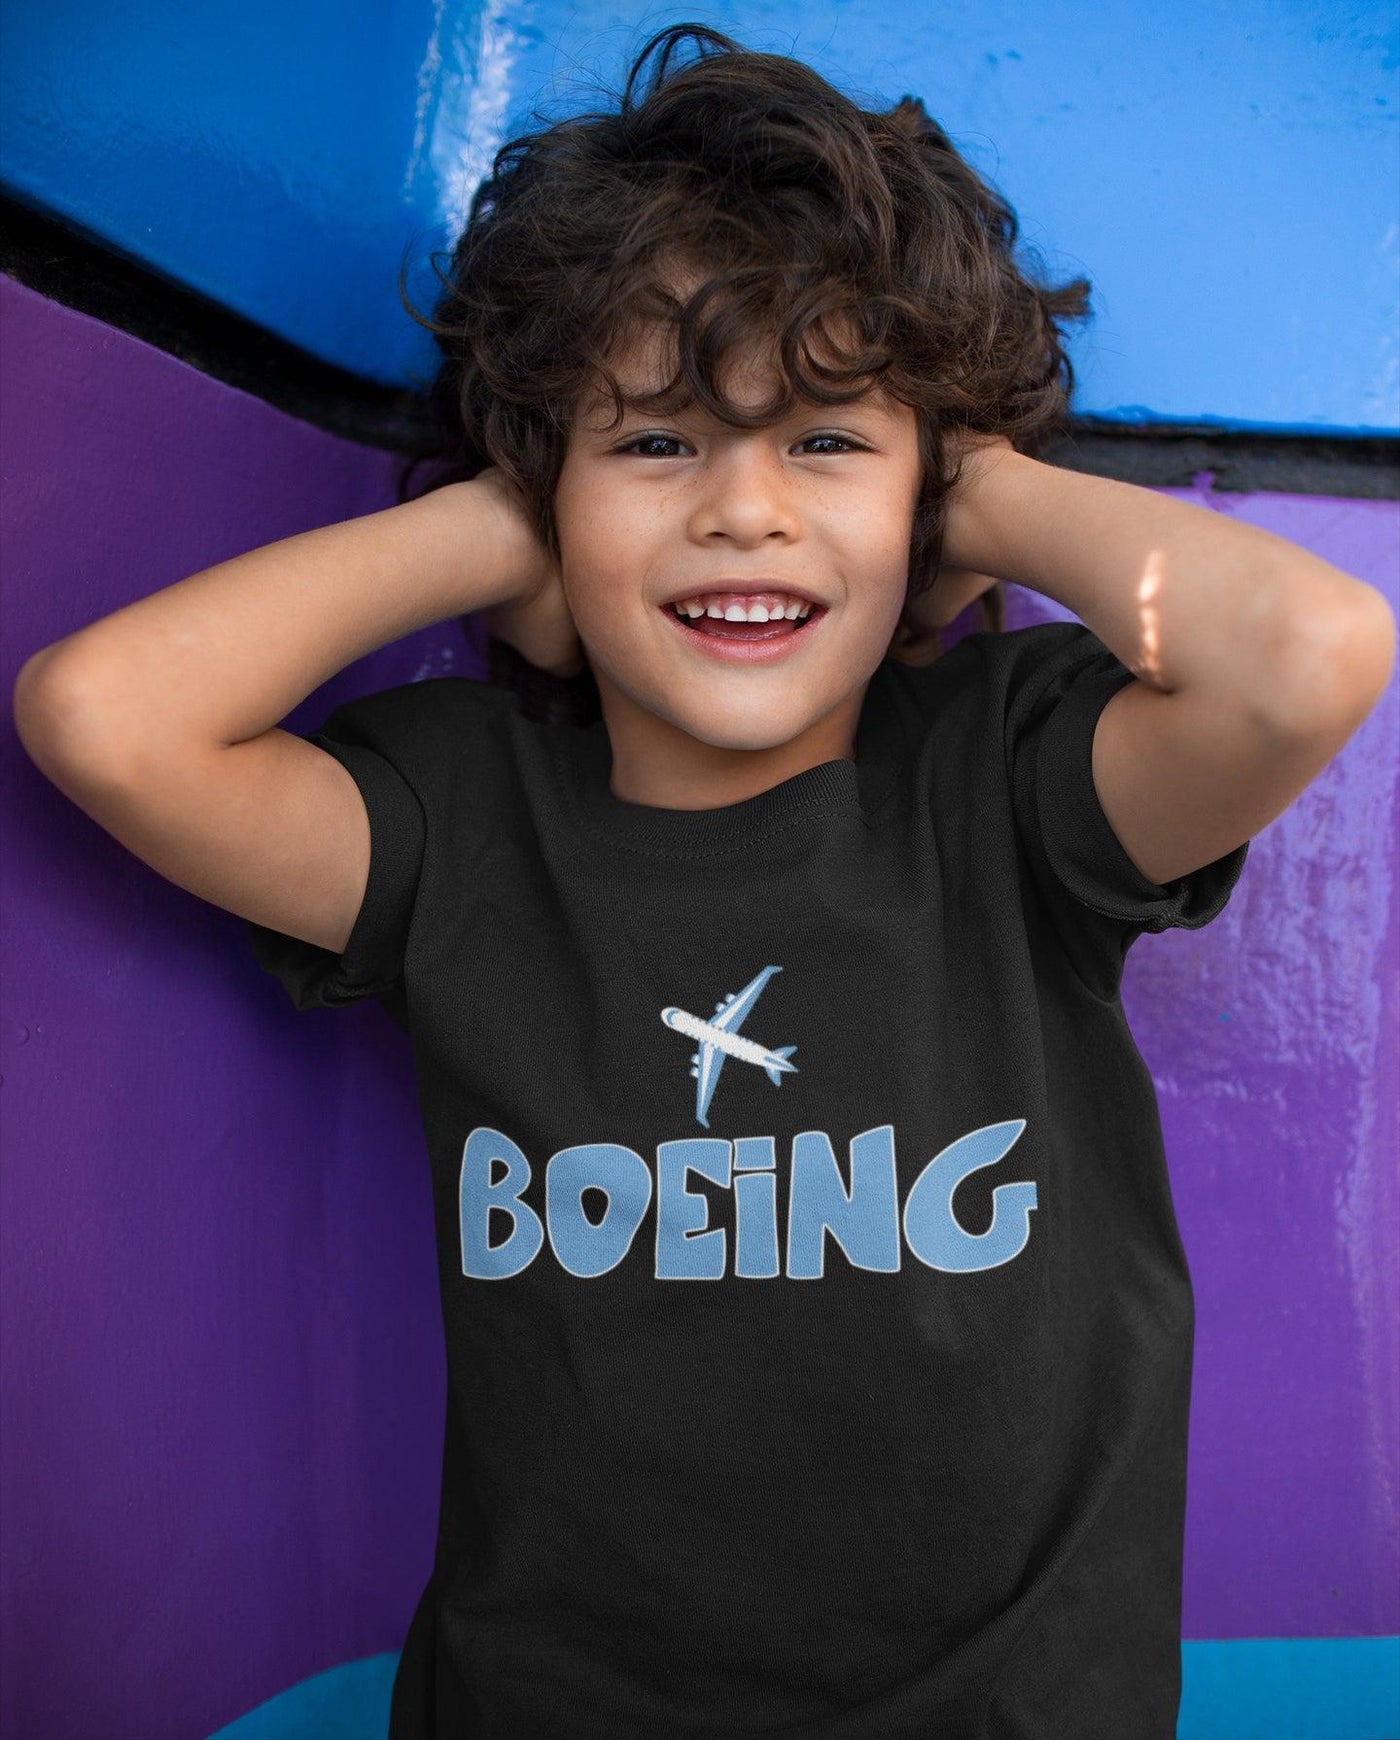 Boeing Pilot Kids T-Shirt - Aero Armour